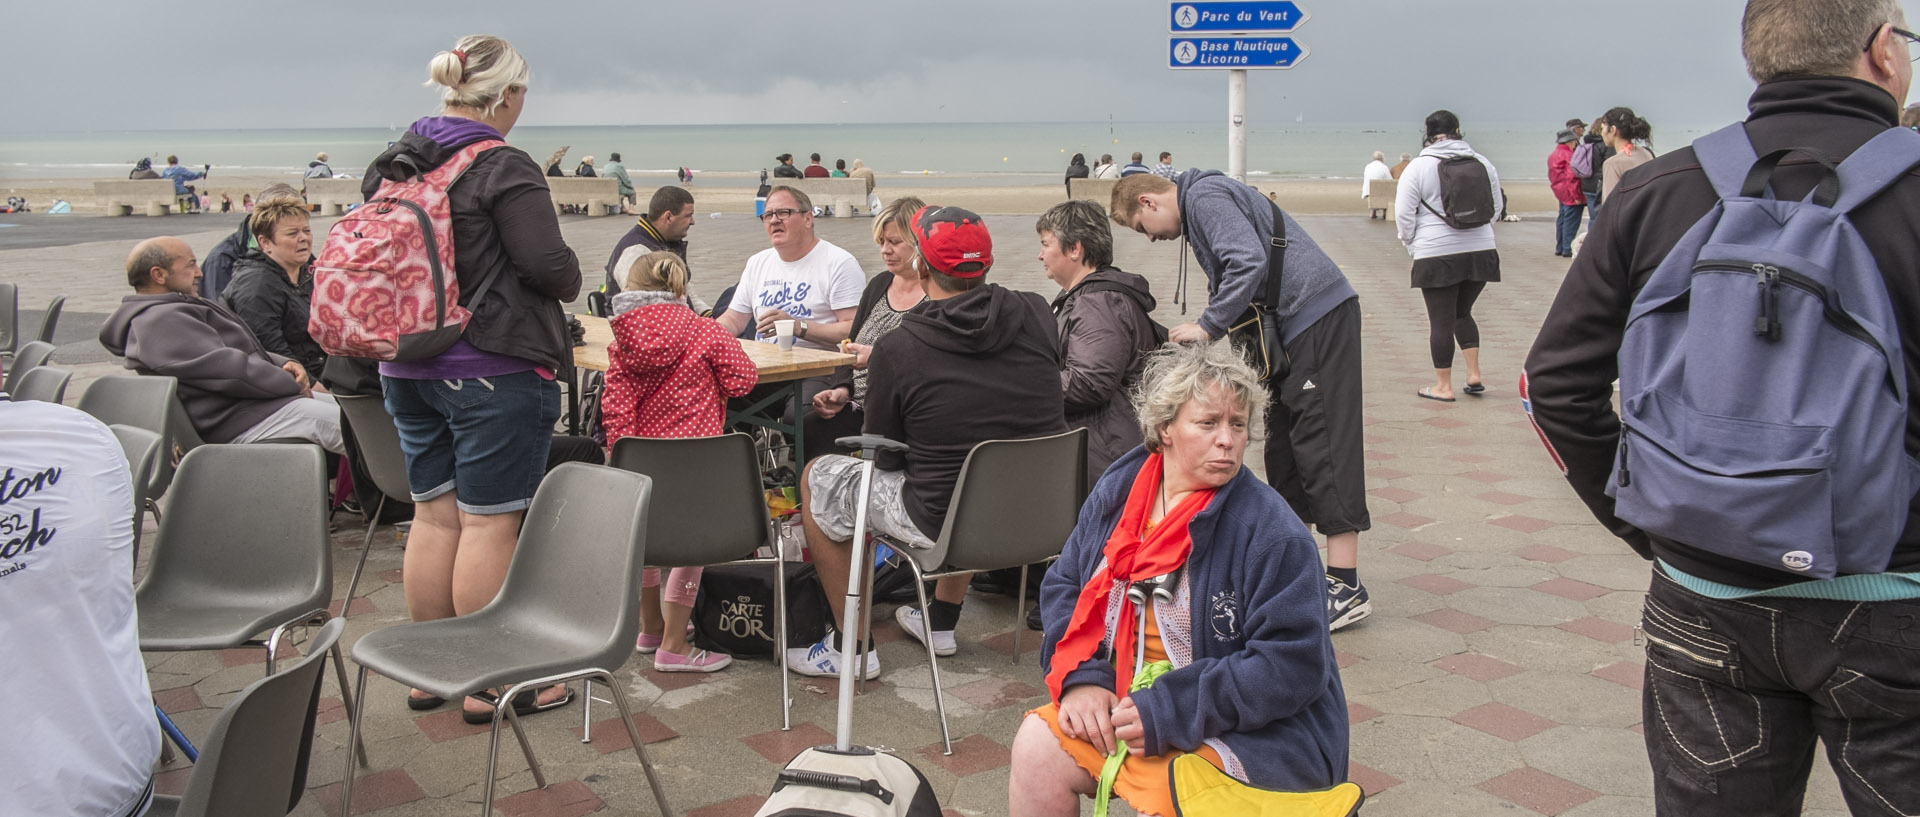 Jeudi 20 août 2015, 15:27, Malo les bains, Dunkerque